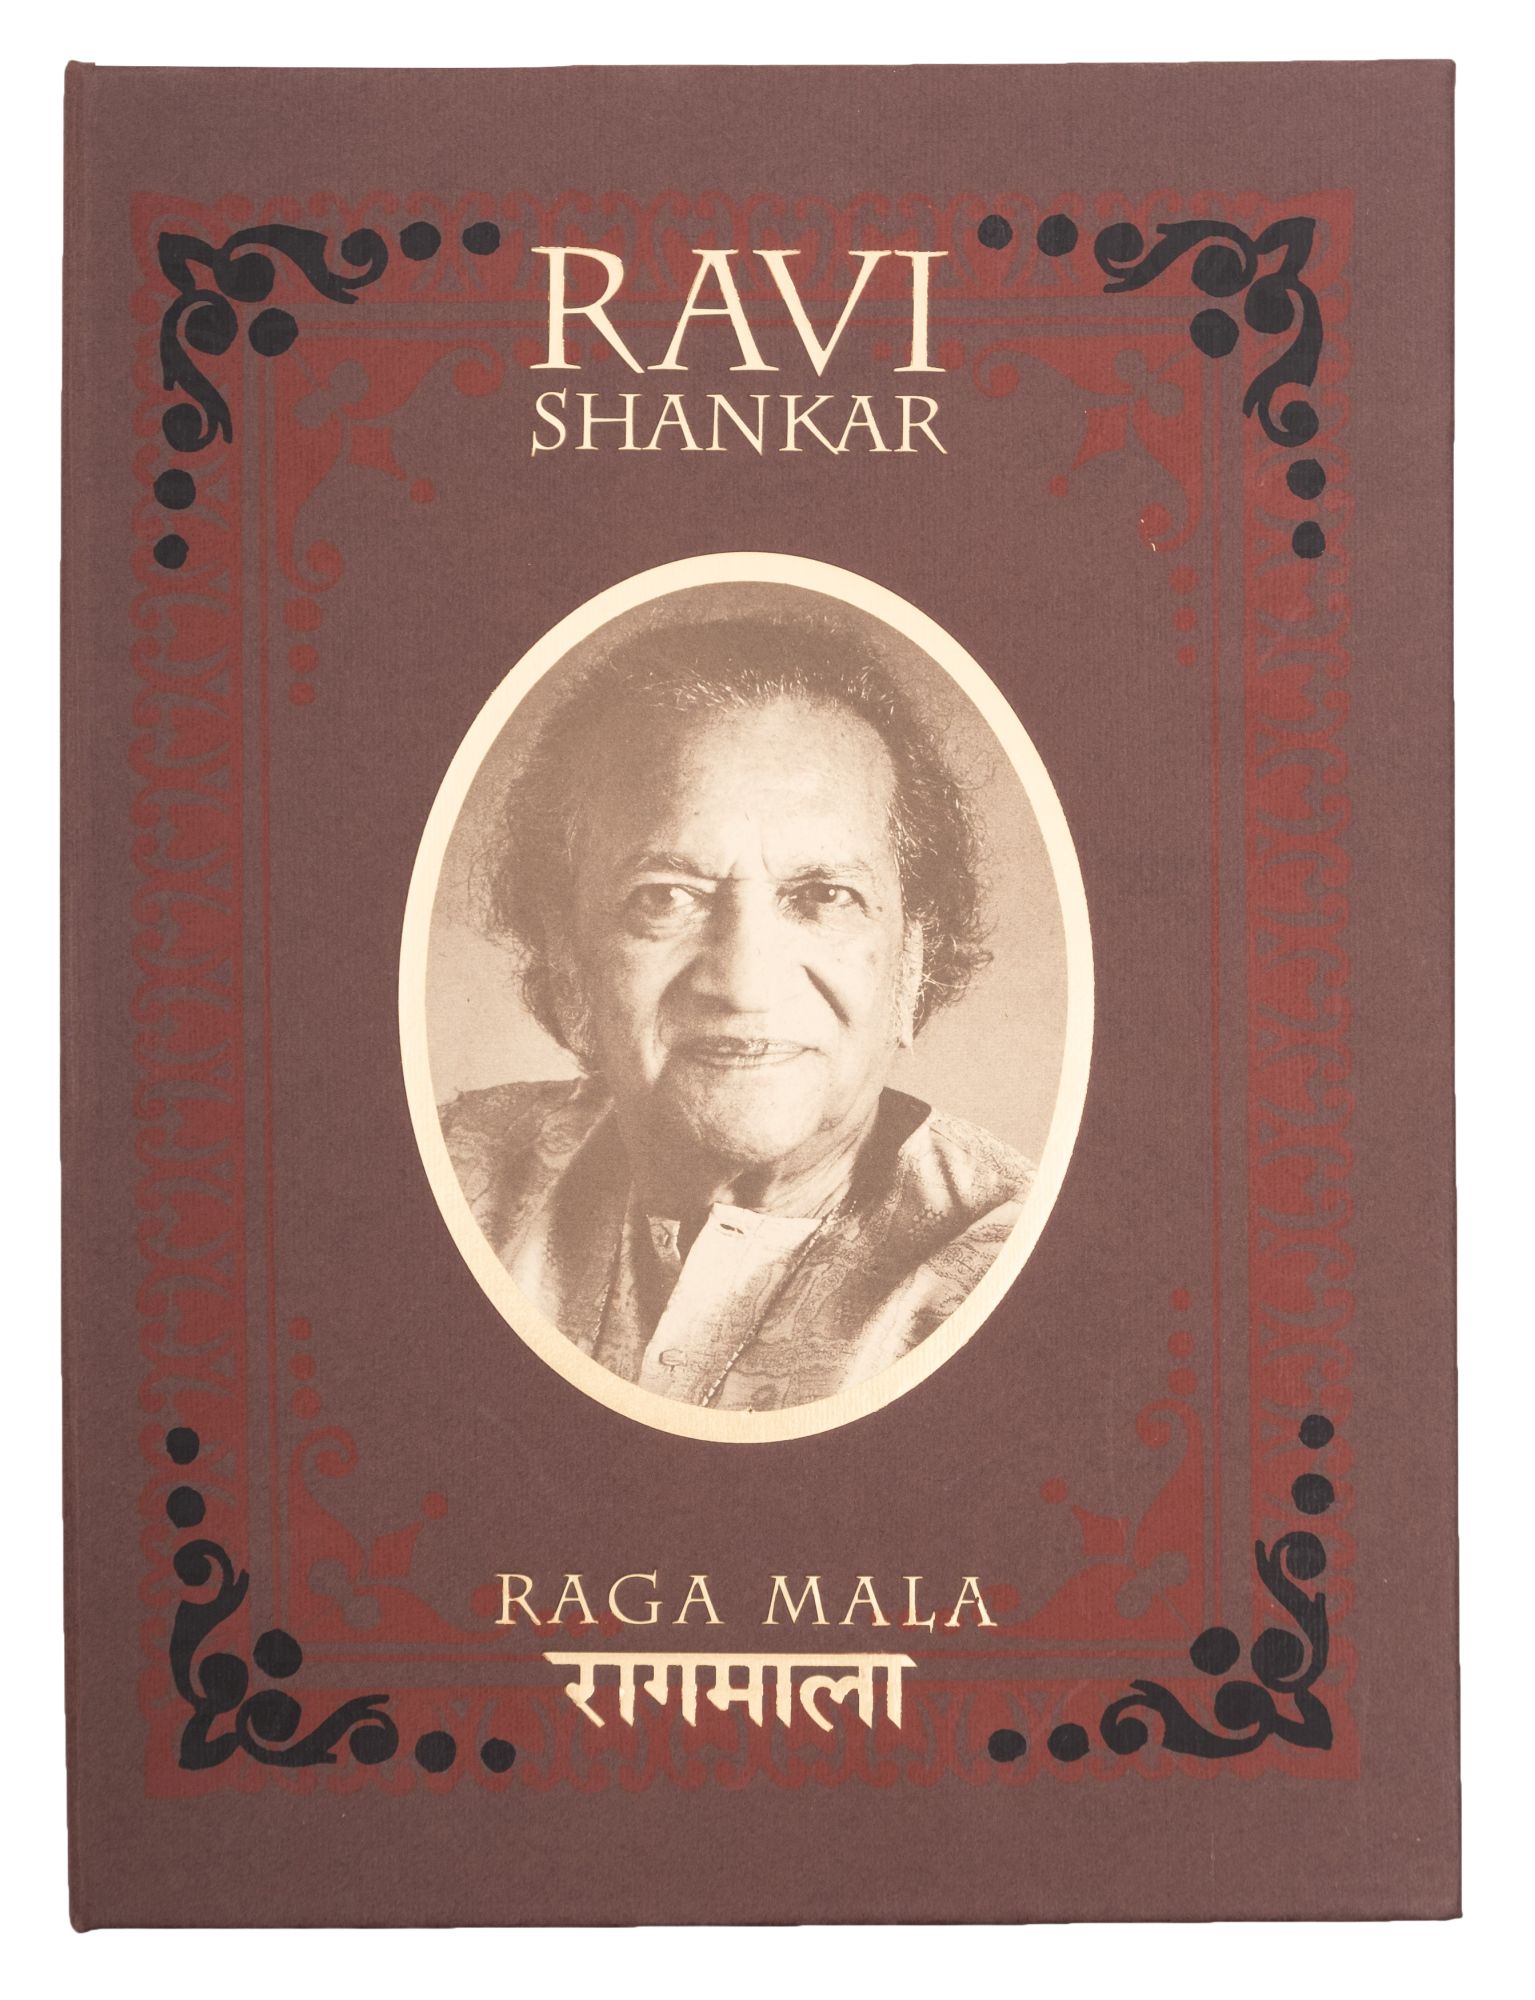 HARRISON, George, edited and introduced by Raga Mala, the autobiography of Ravi Shankar,